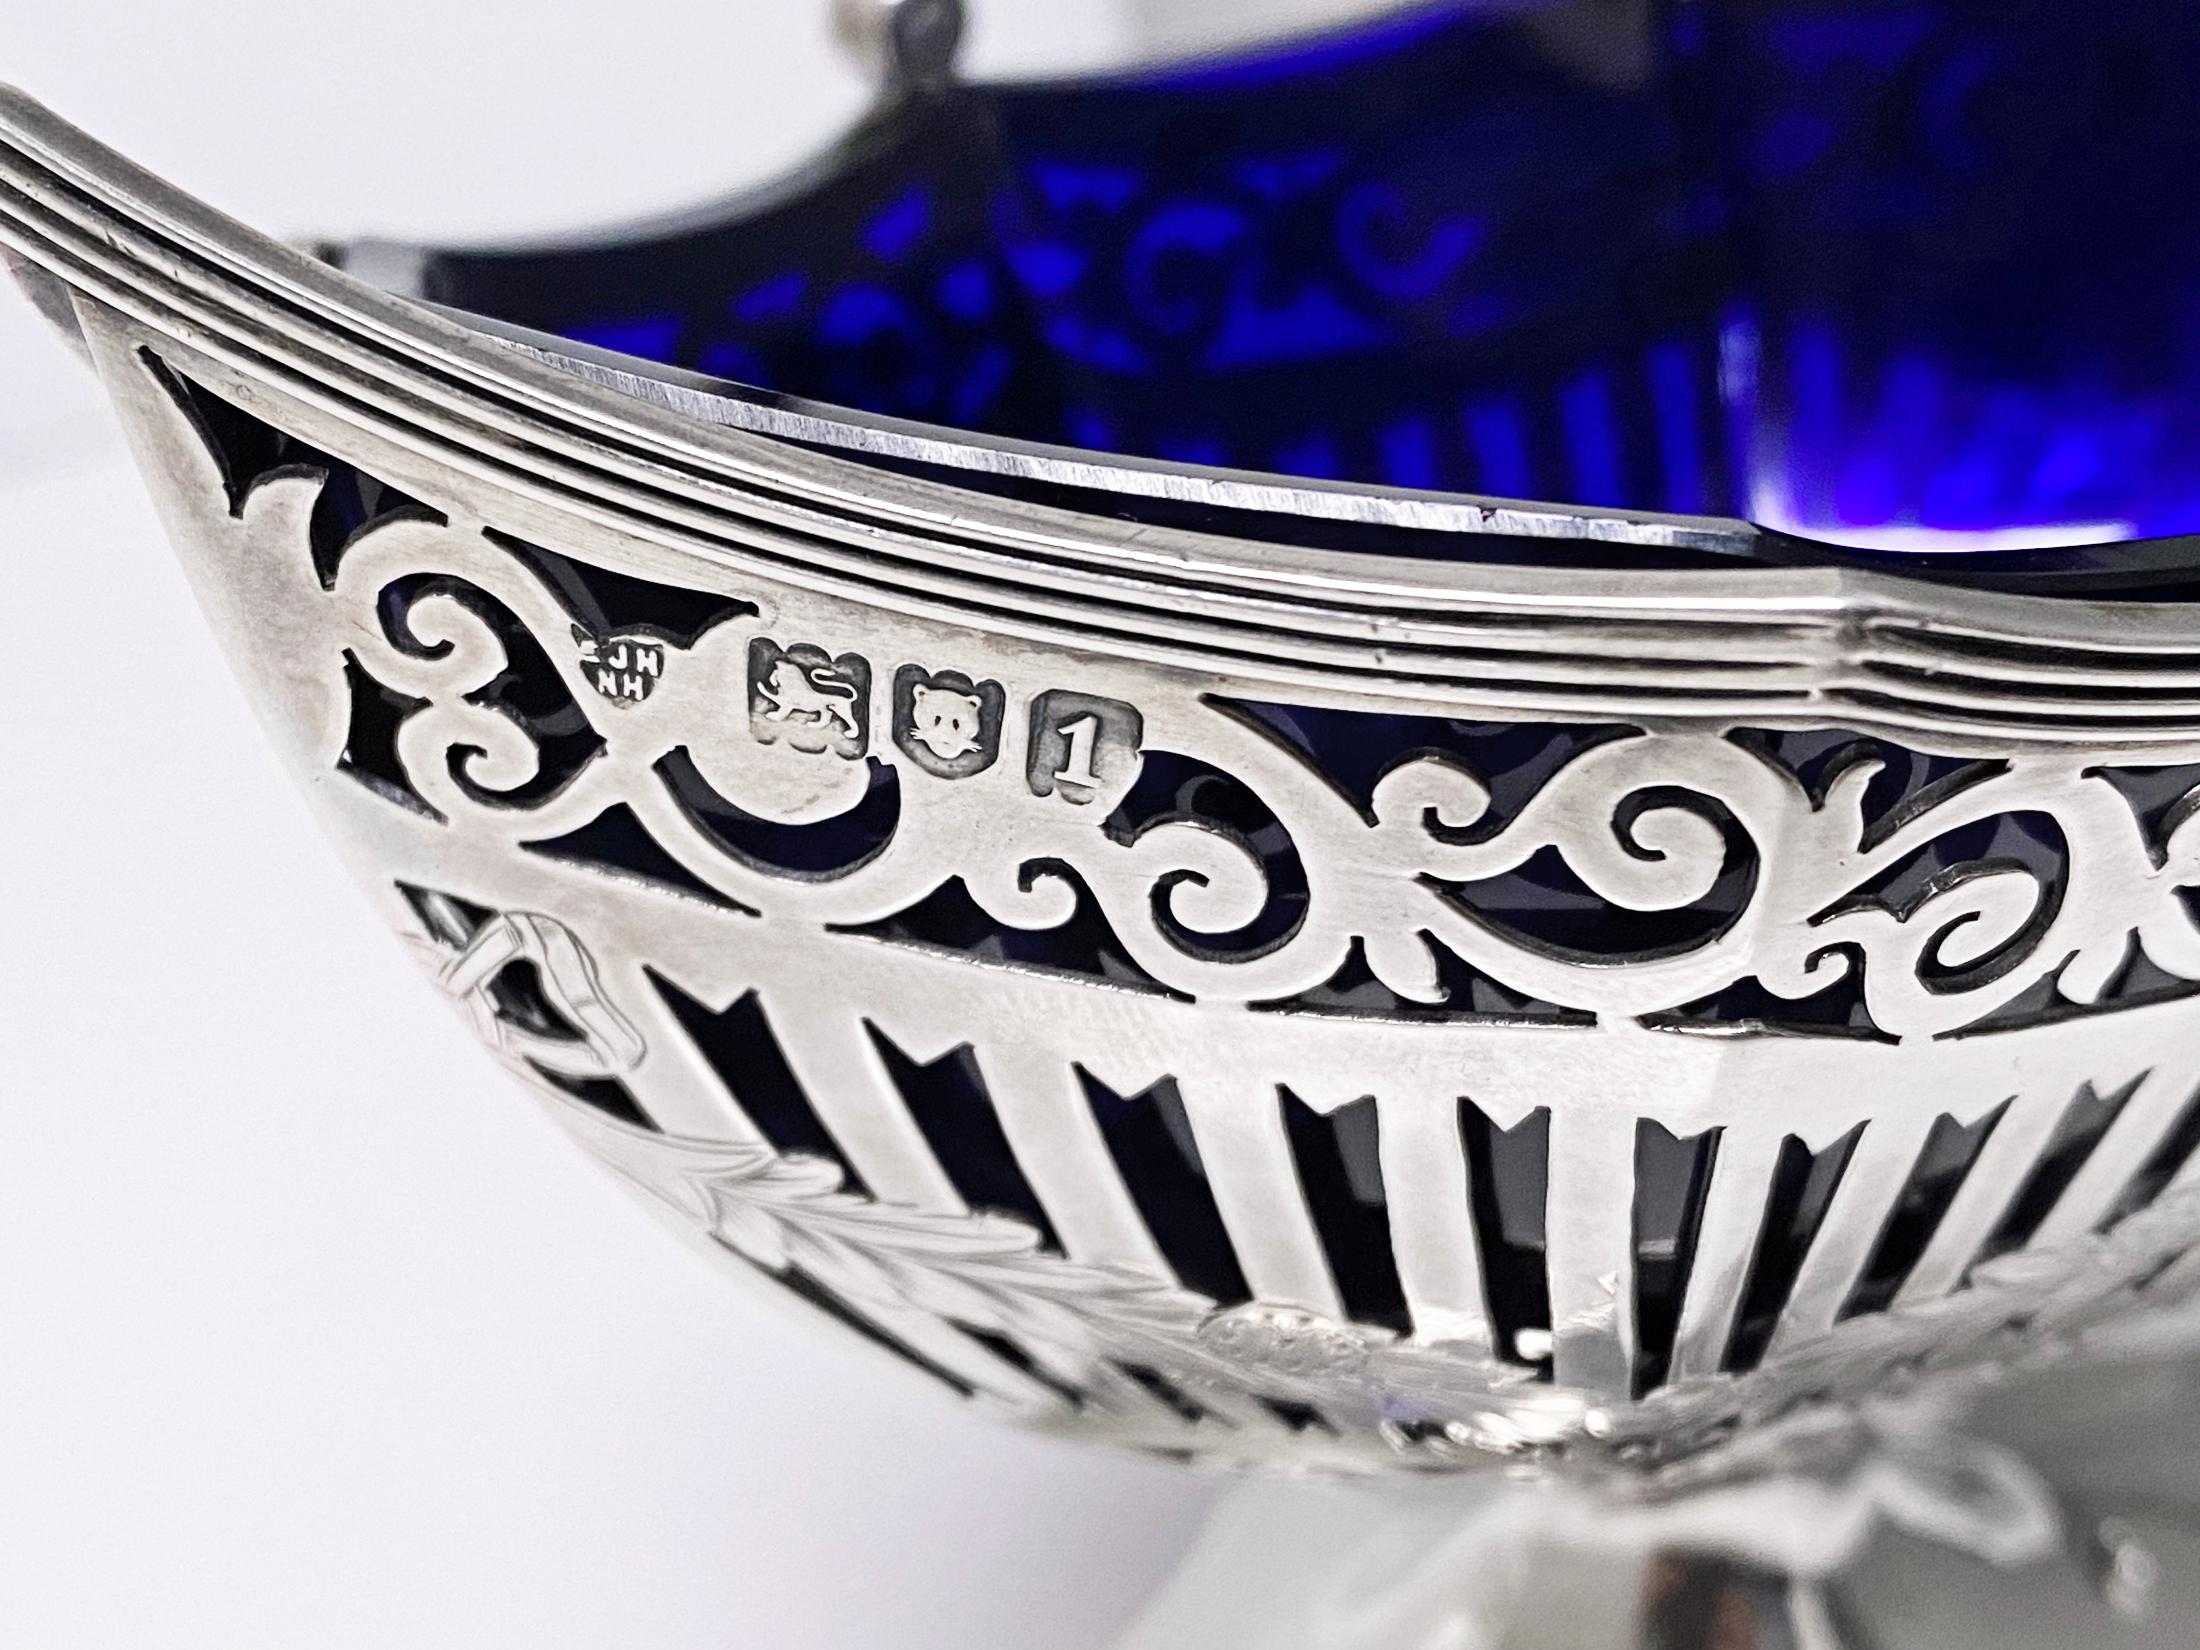 Early 20th Century Antique Silver Sugar Basket cobalt blue glass liner London 1906 Haseler 